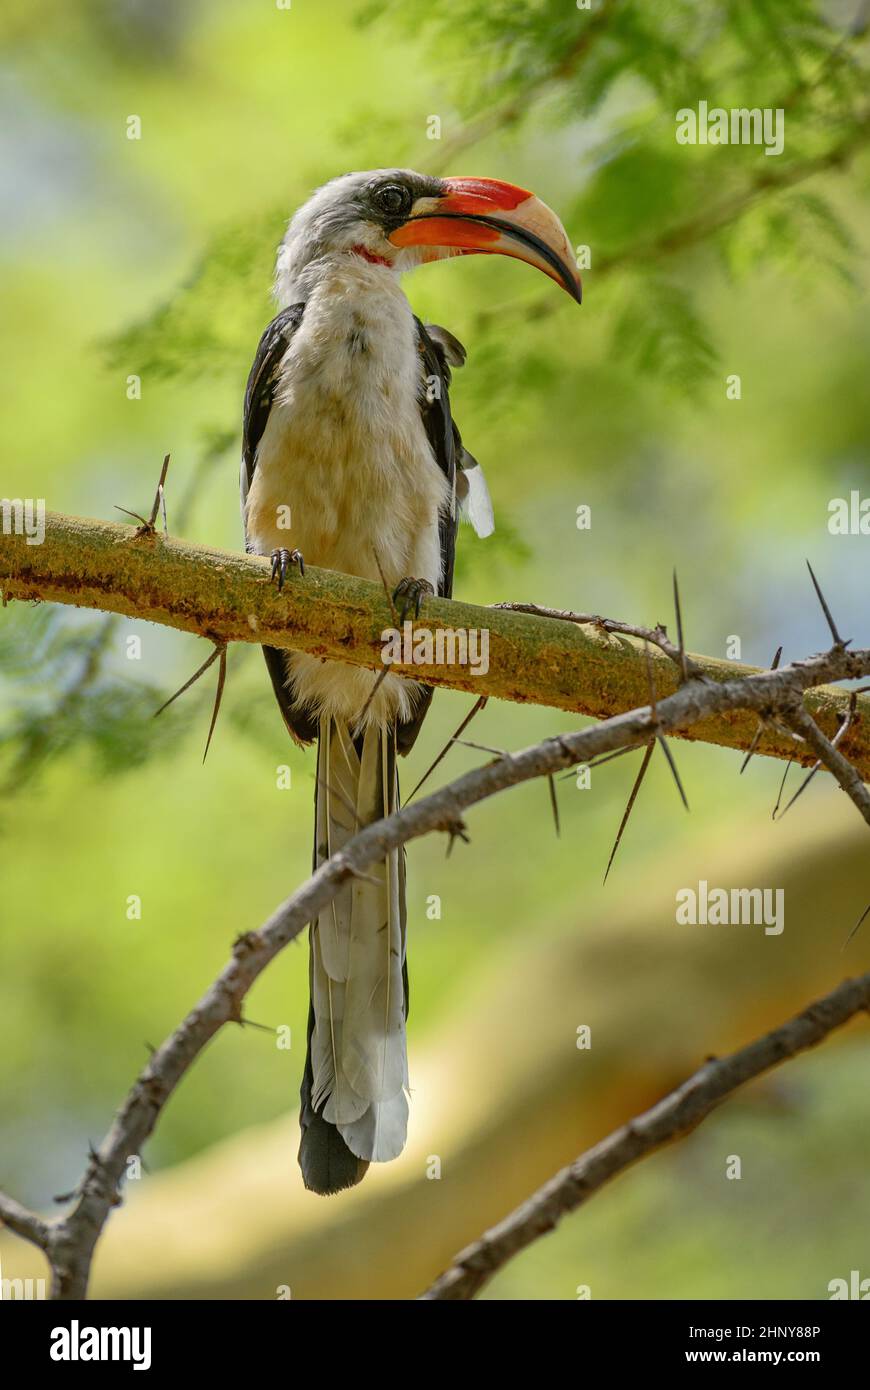 Von Der Decken's Hornbill - Tockus deckeni, beautiful colored hornbill from East African forests and woodlands, Tsavo East, Kenya. Stock Photo